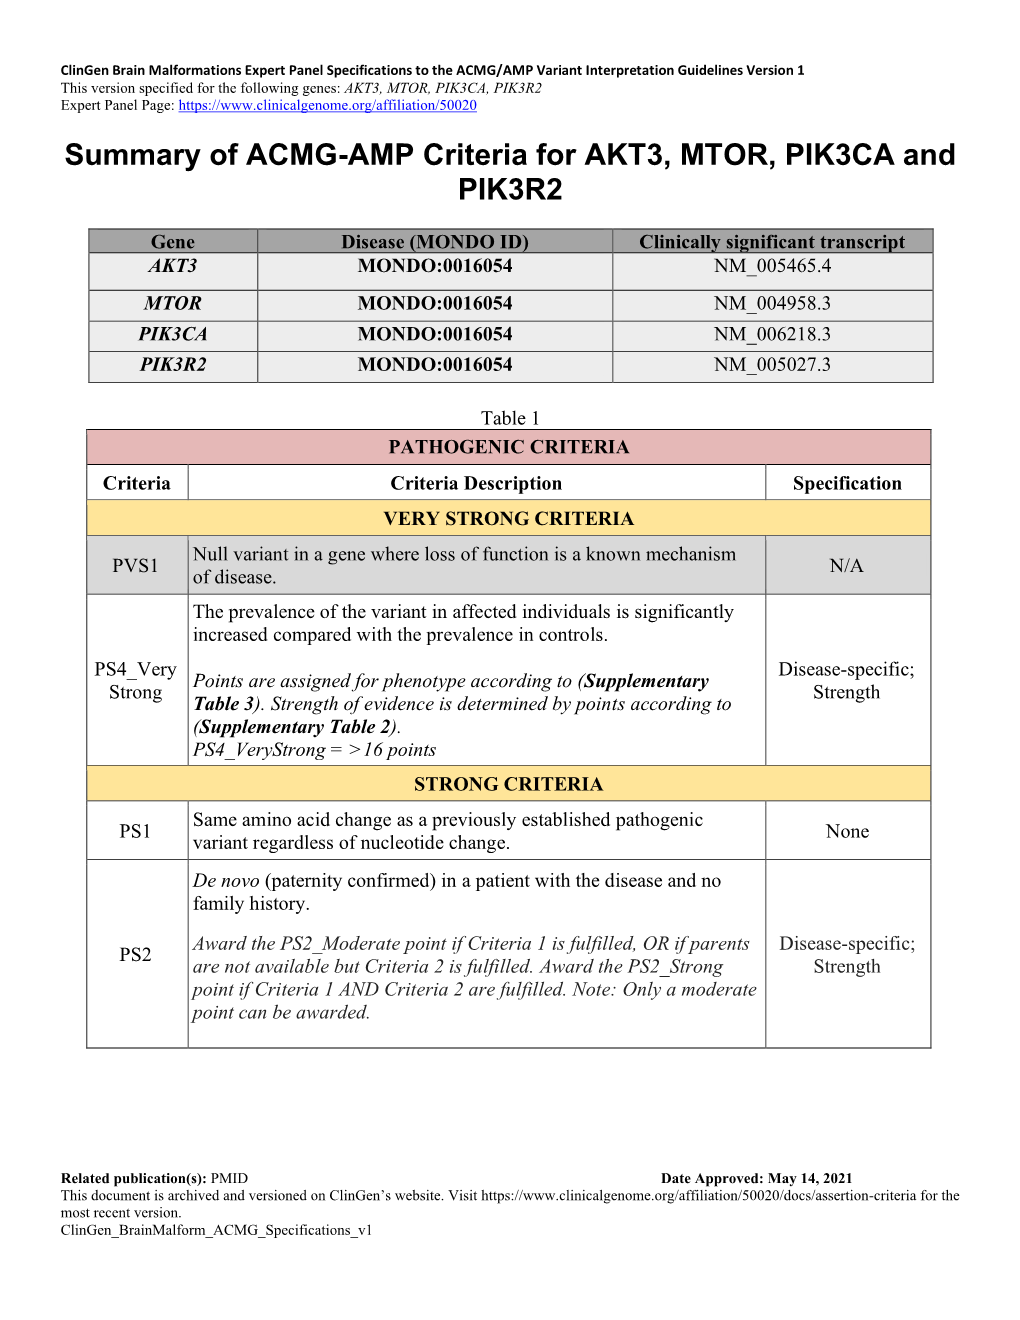 Summary of ACMG-AMP Criteria for AKT3, MTOR, PIK3CA and PIK3R2